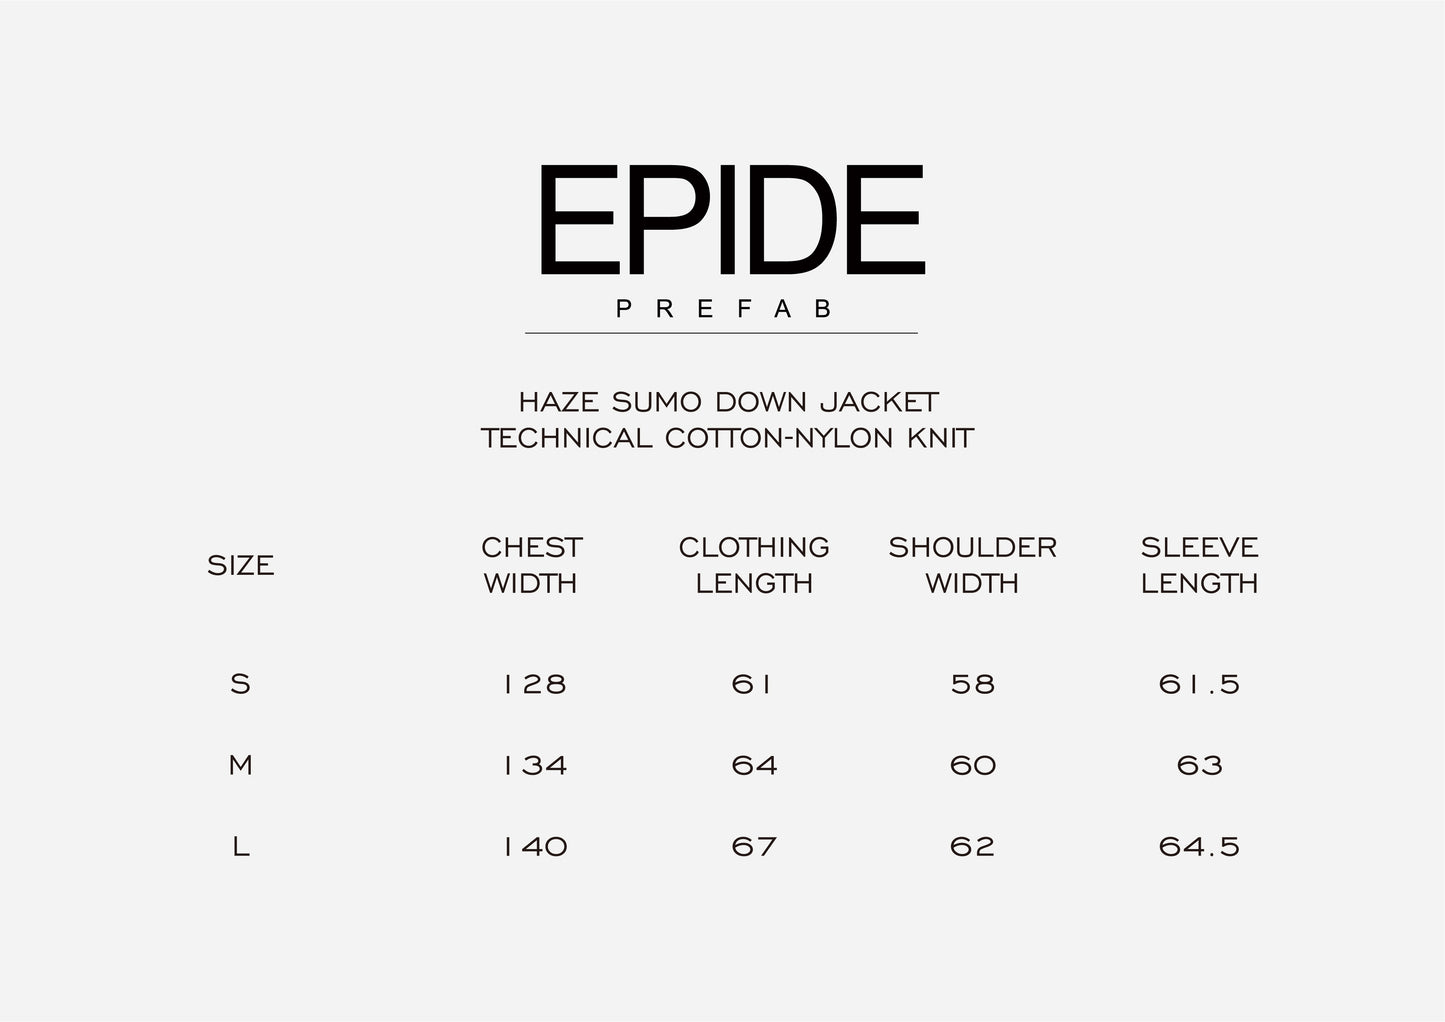 Haze Sumo Down Jacket/Technical Cotton-Nylon Knit